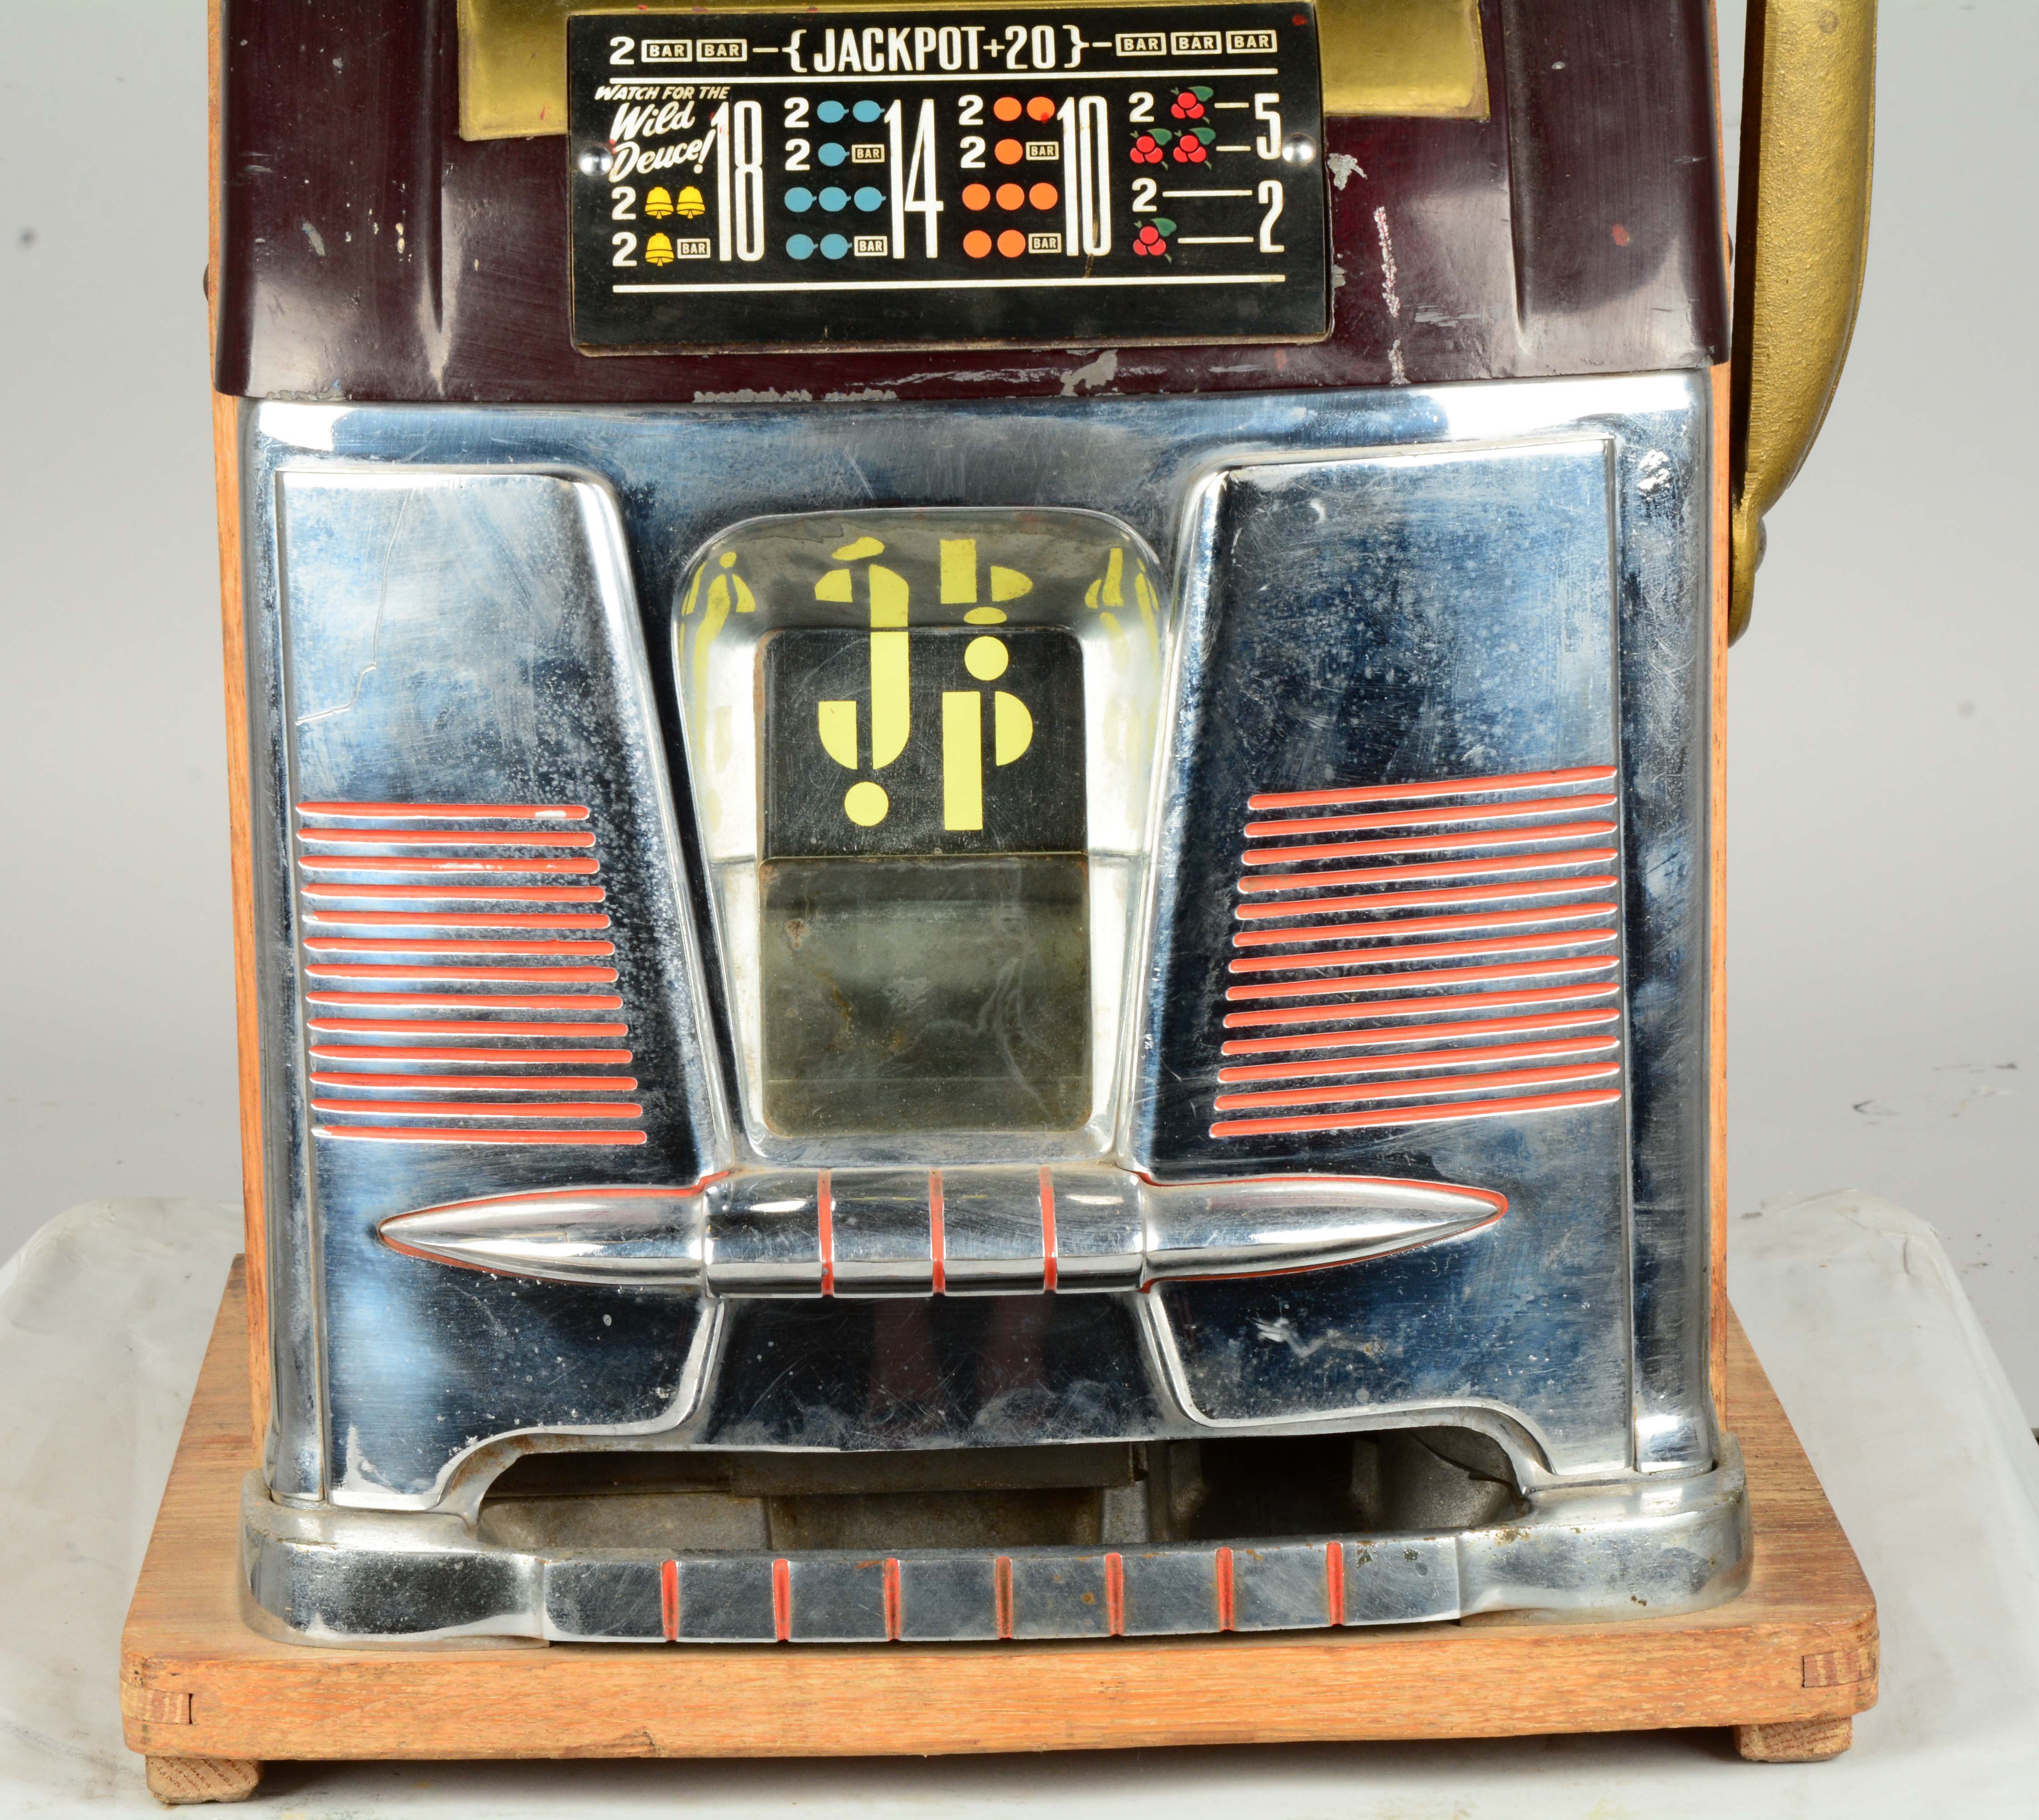 bally deuces wild slot machine for sale